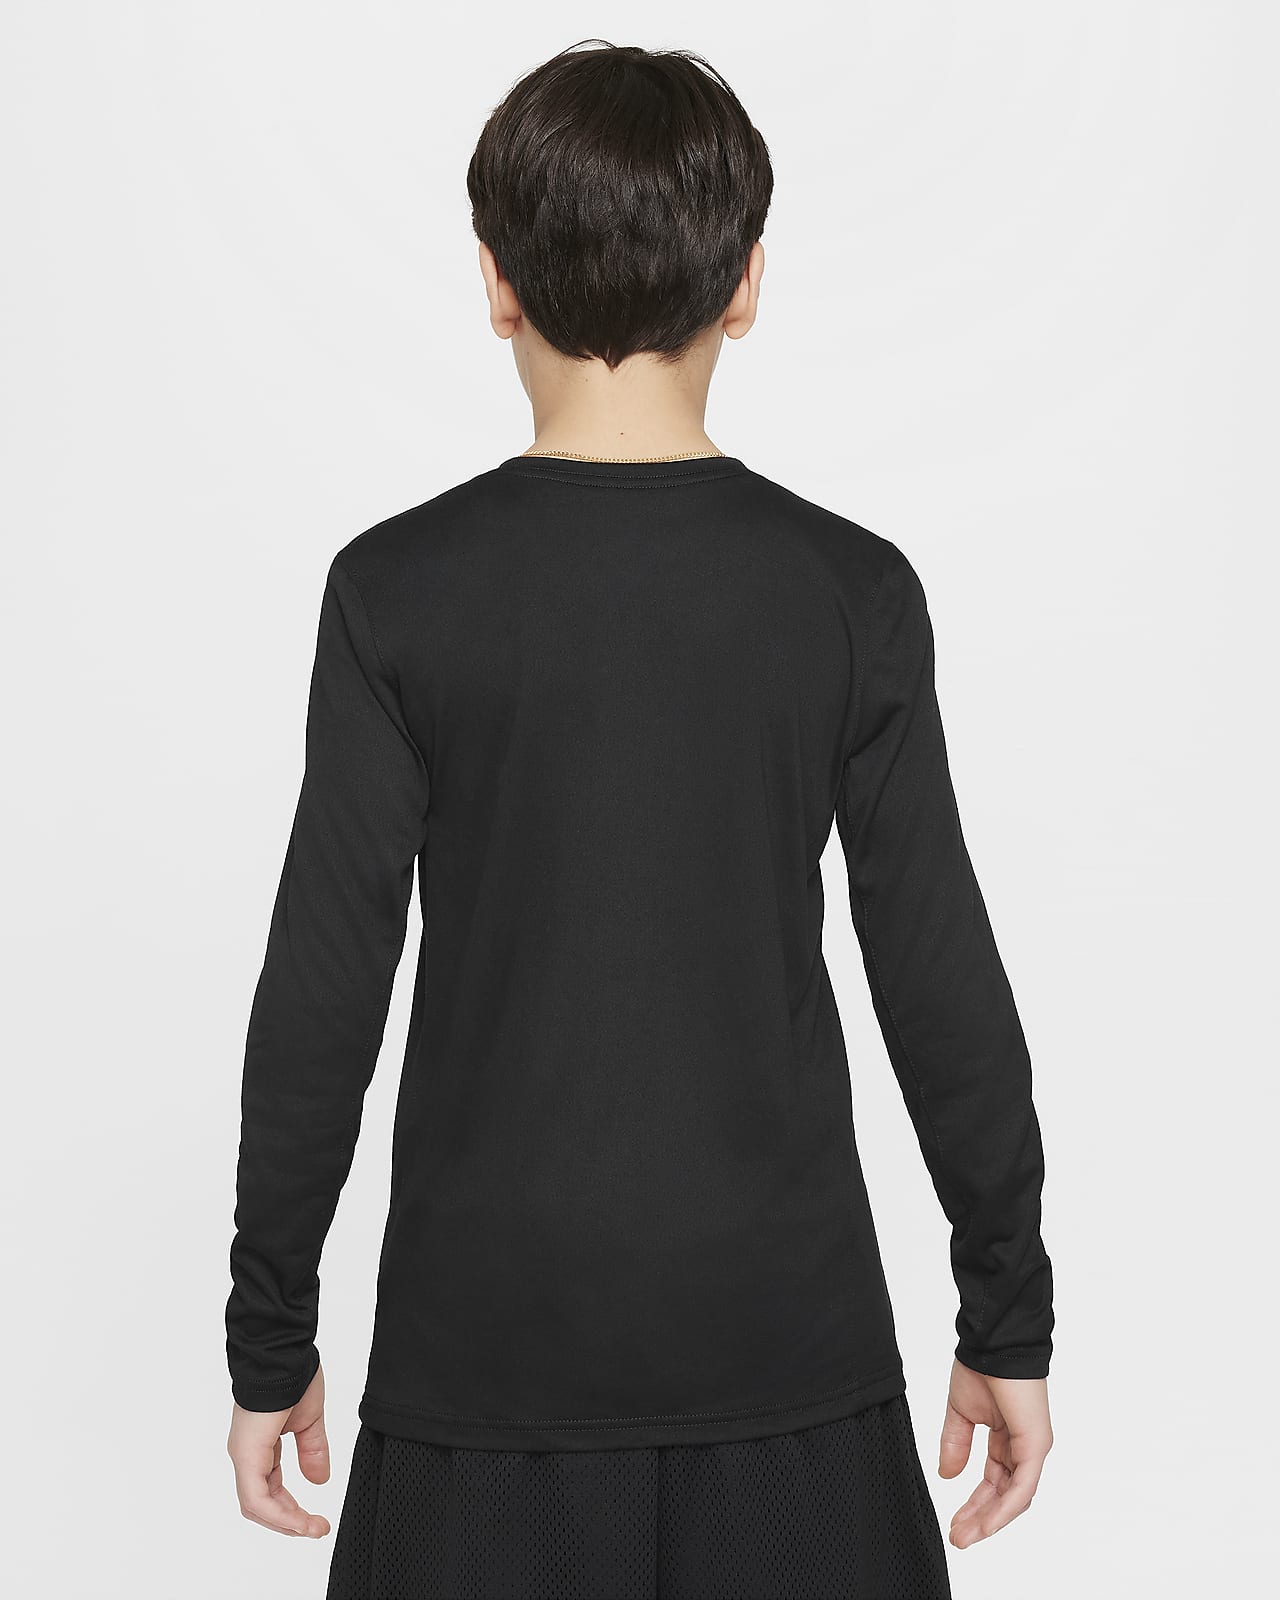 Youth GT Long Sleeve Performance Shirt S / Black